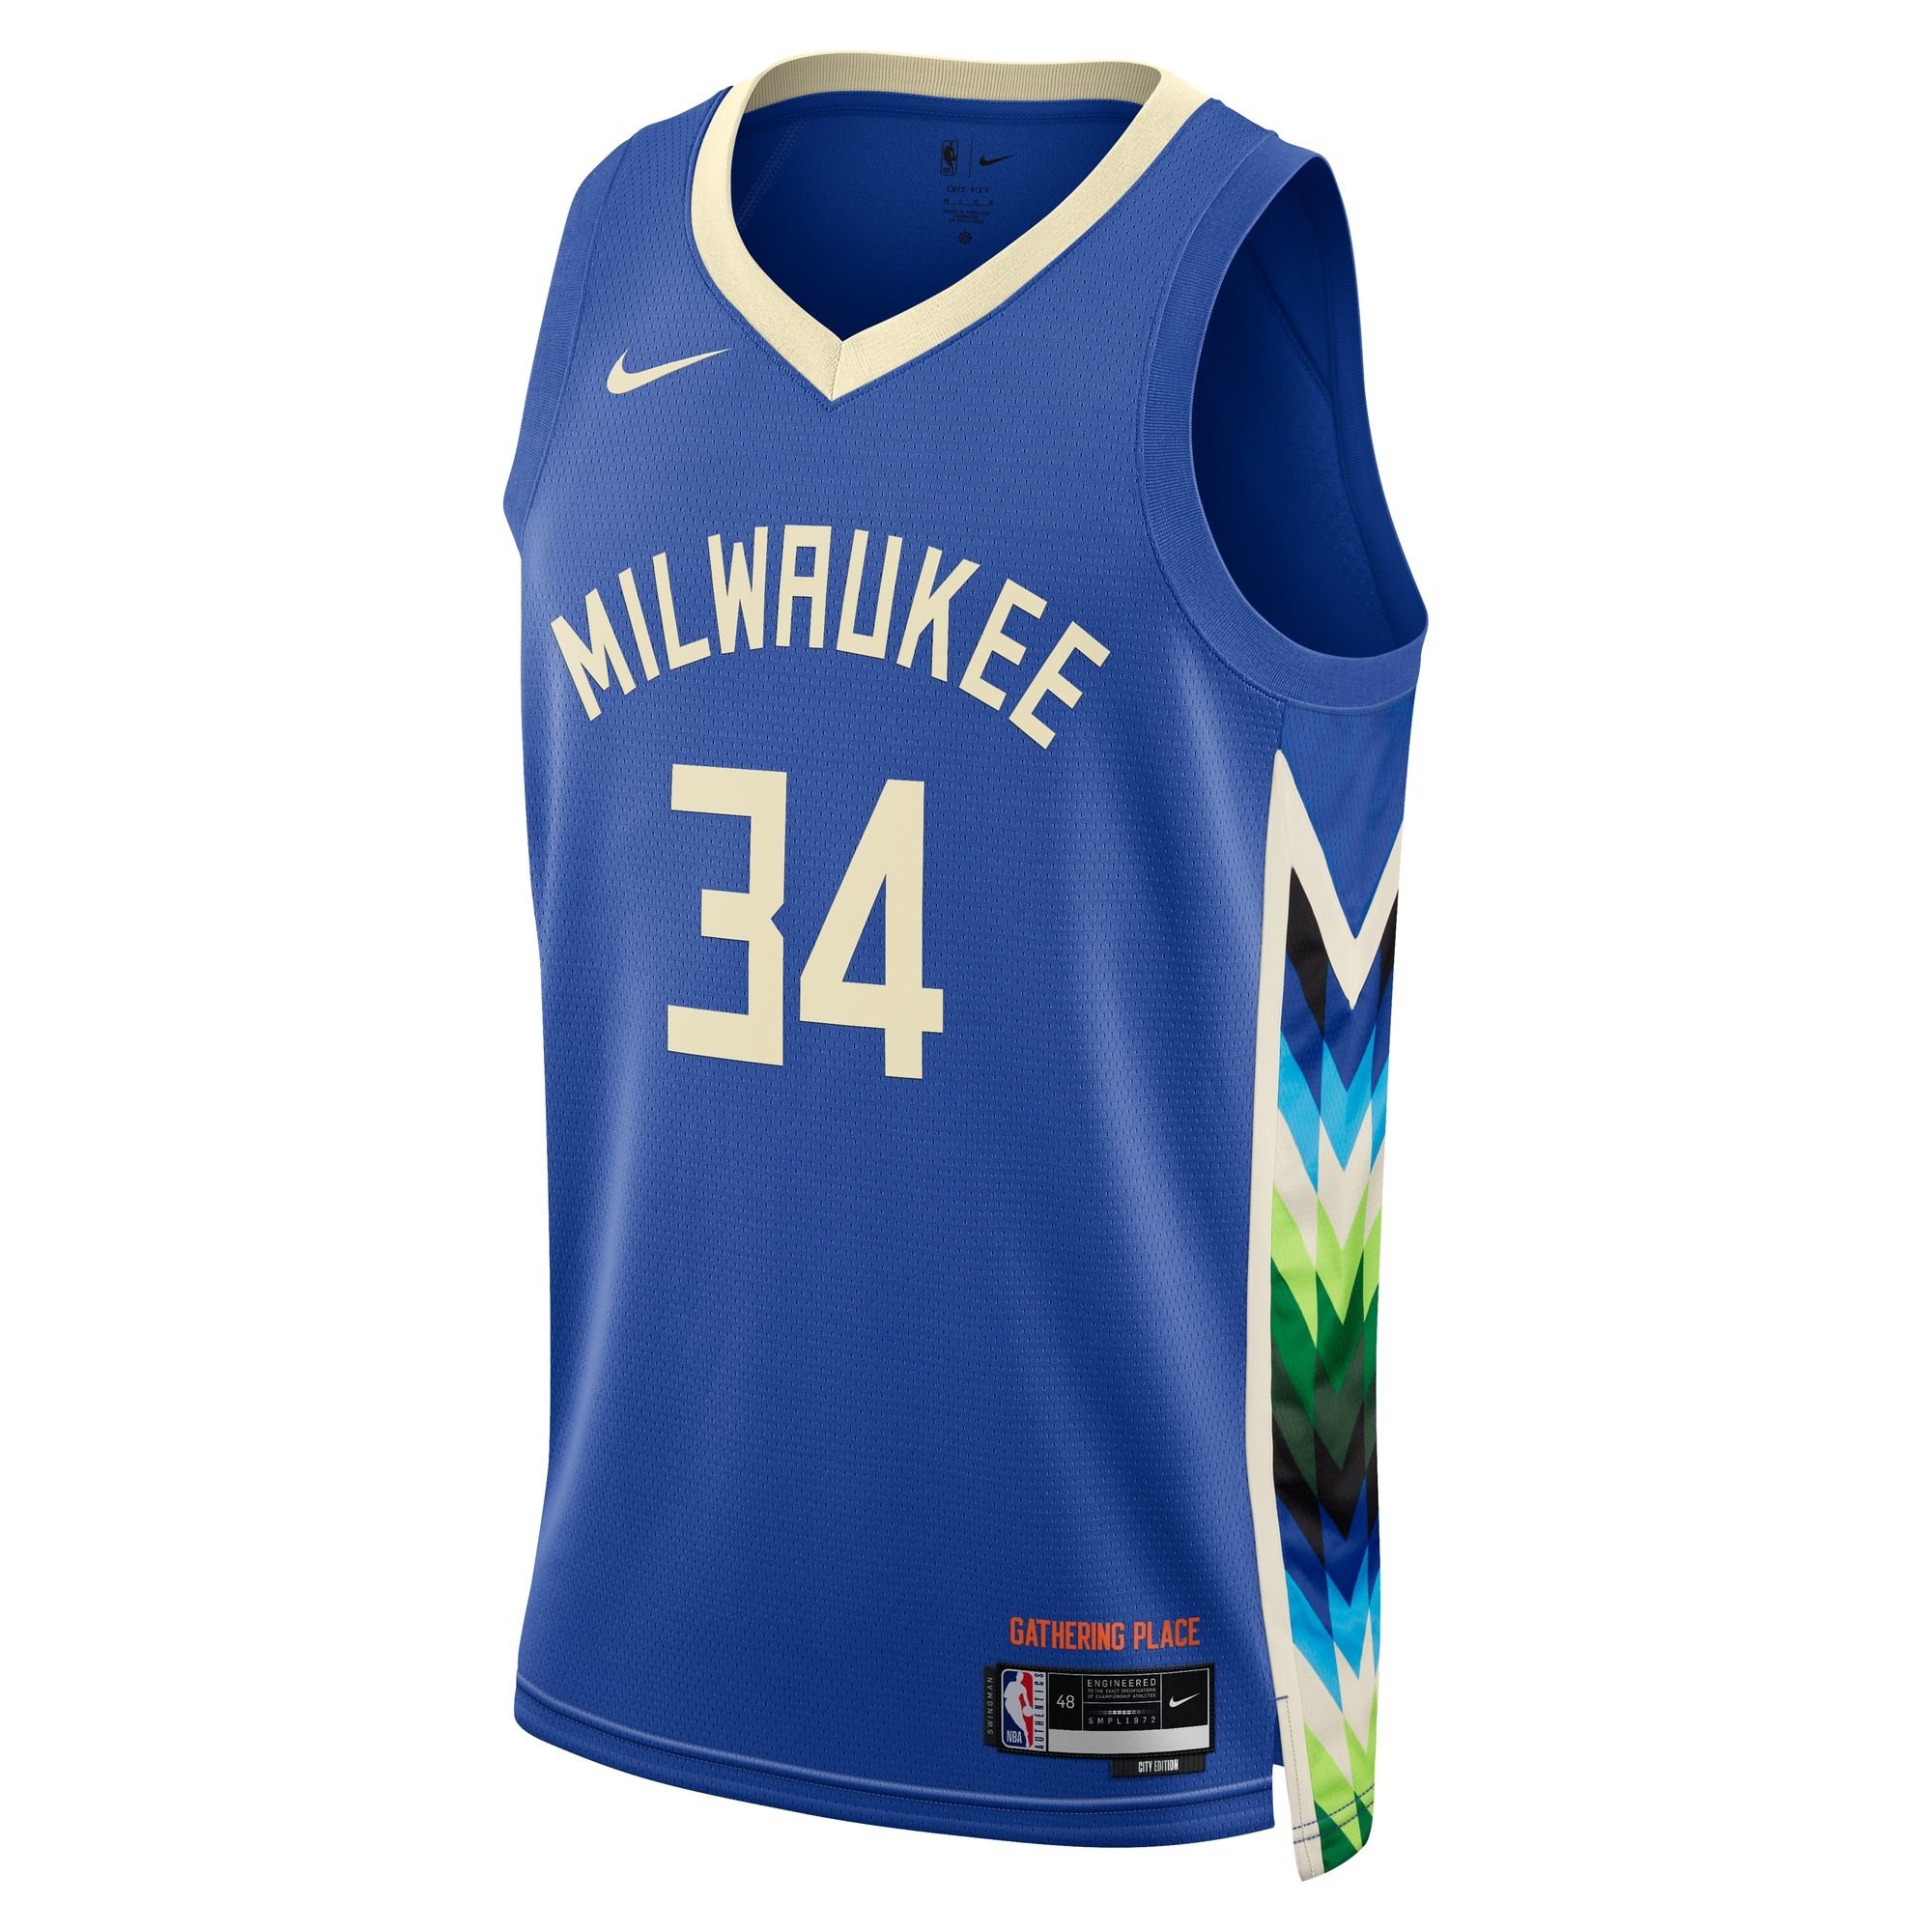 Nike Milwaukee Brewers Women's Replica Jersey - White - MODA3